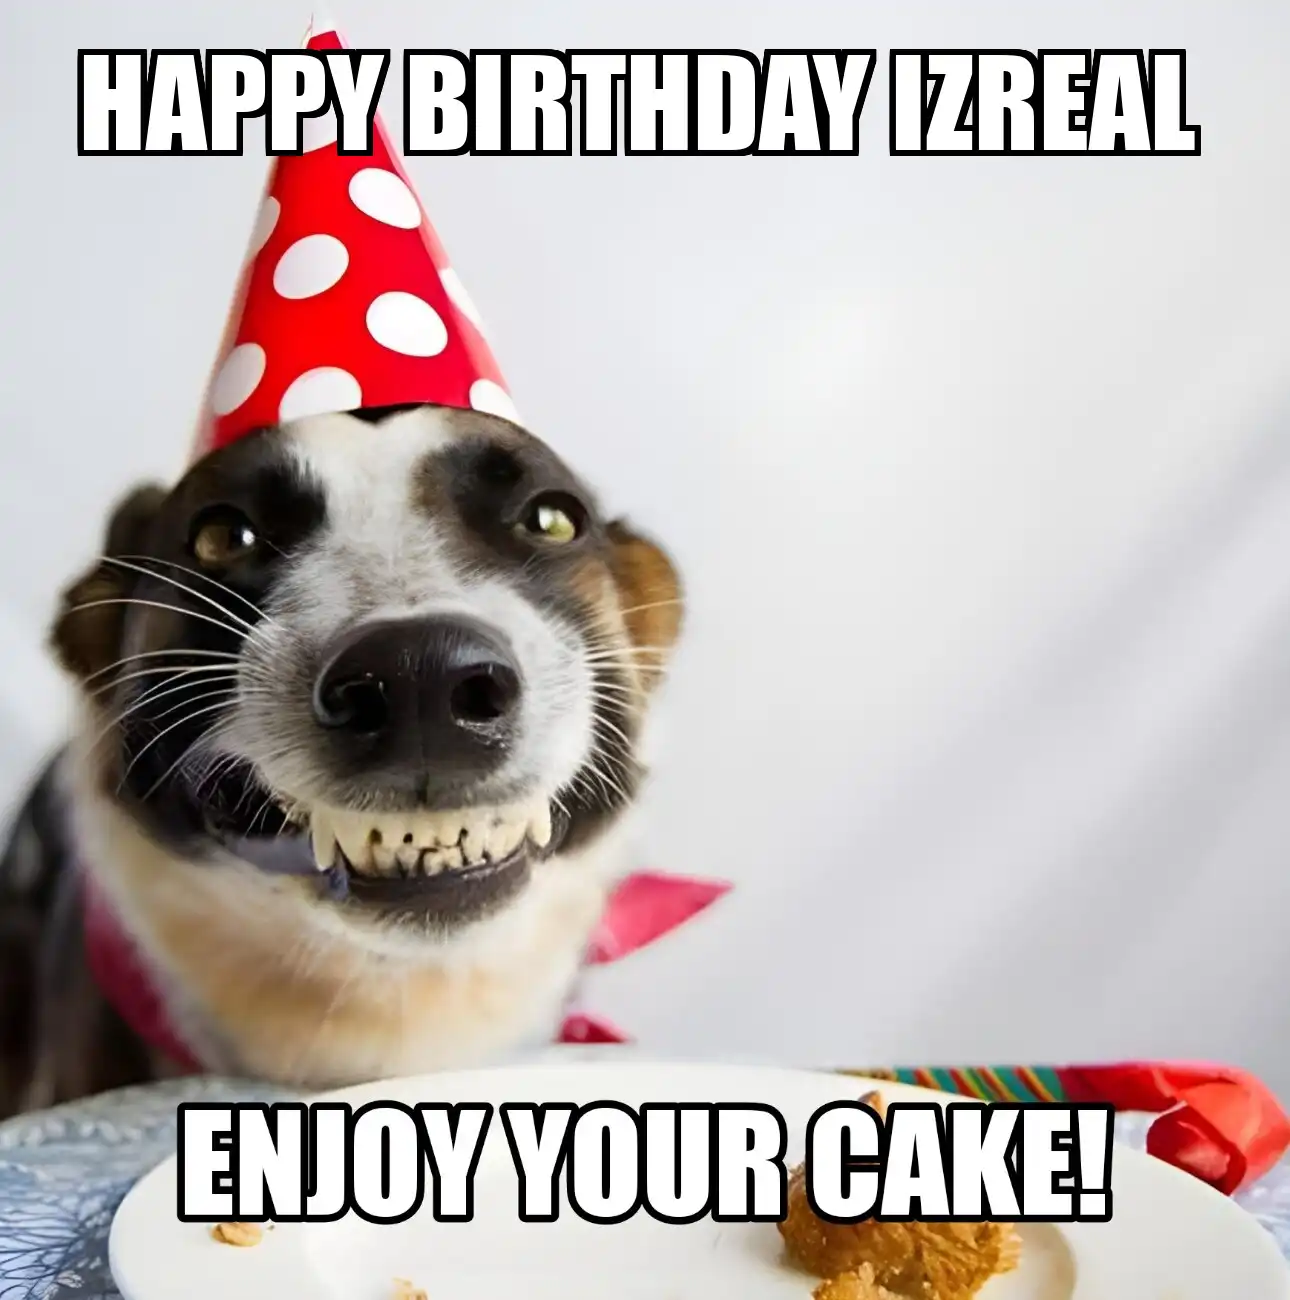 Happy Birthday Izreal Enjoy Your Cake Dog Meme